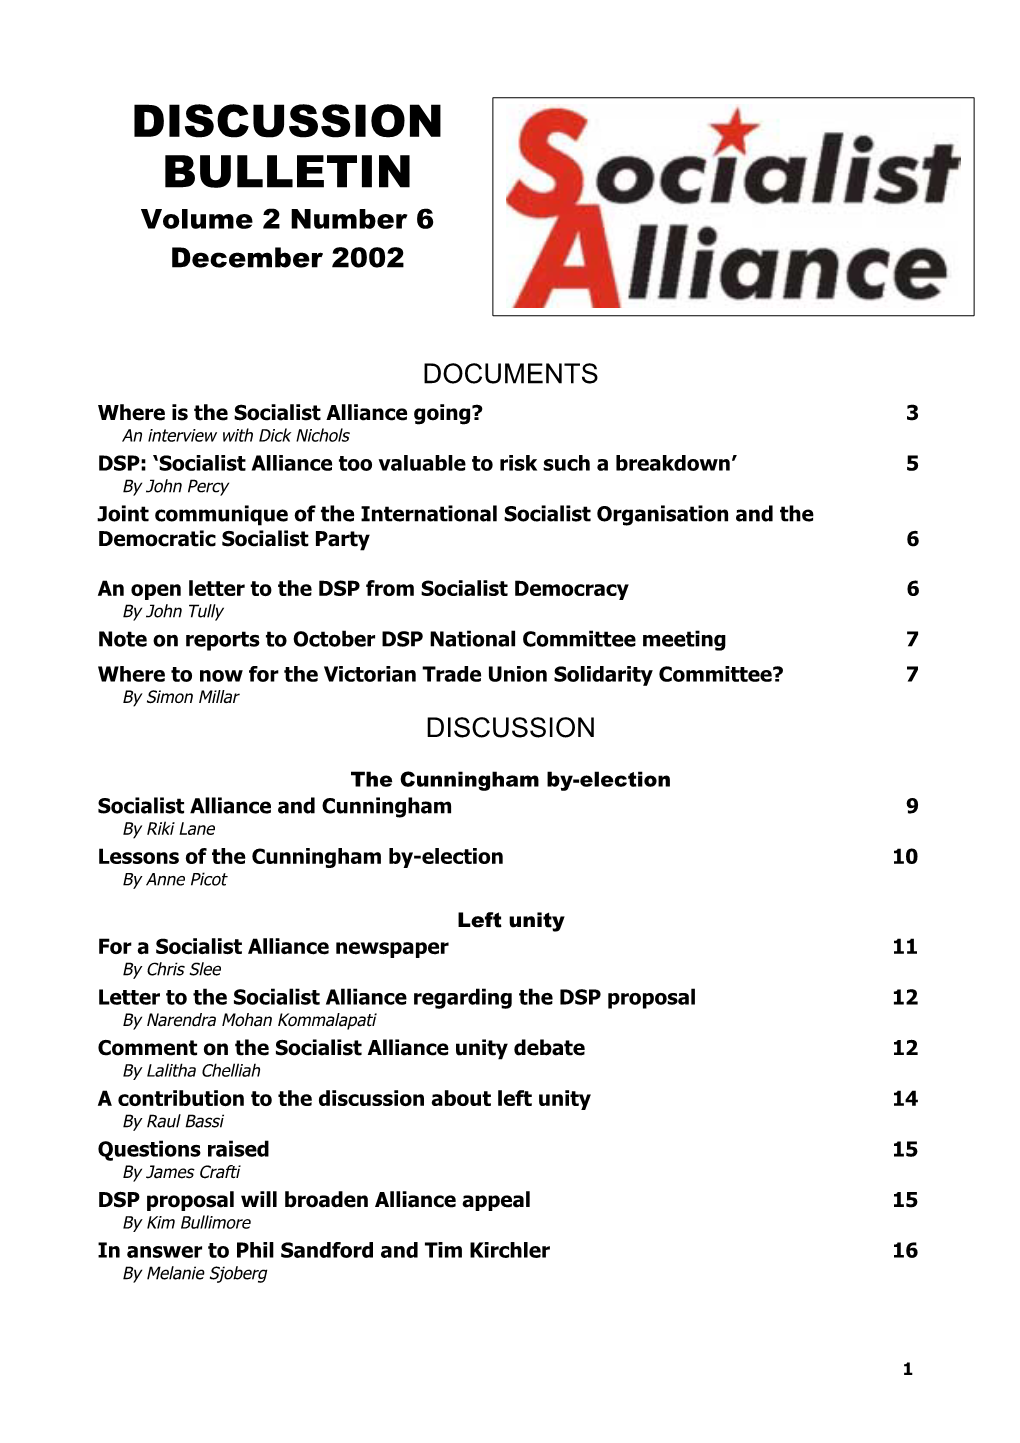 DISCUSSION BULLETIN Volume 2 Number 6 December 2002